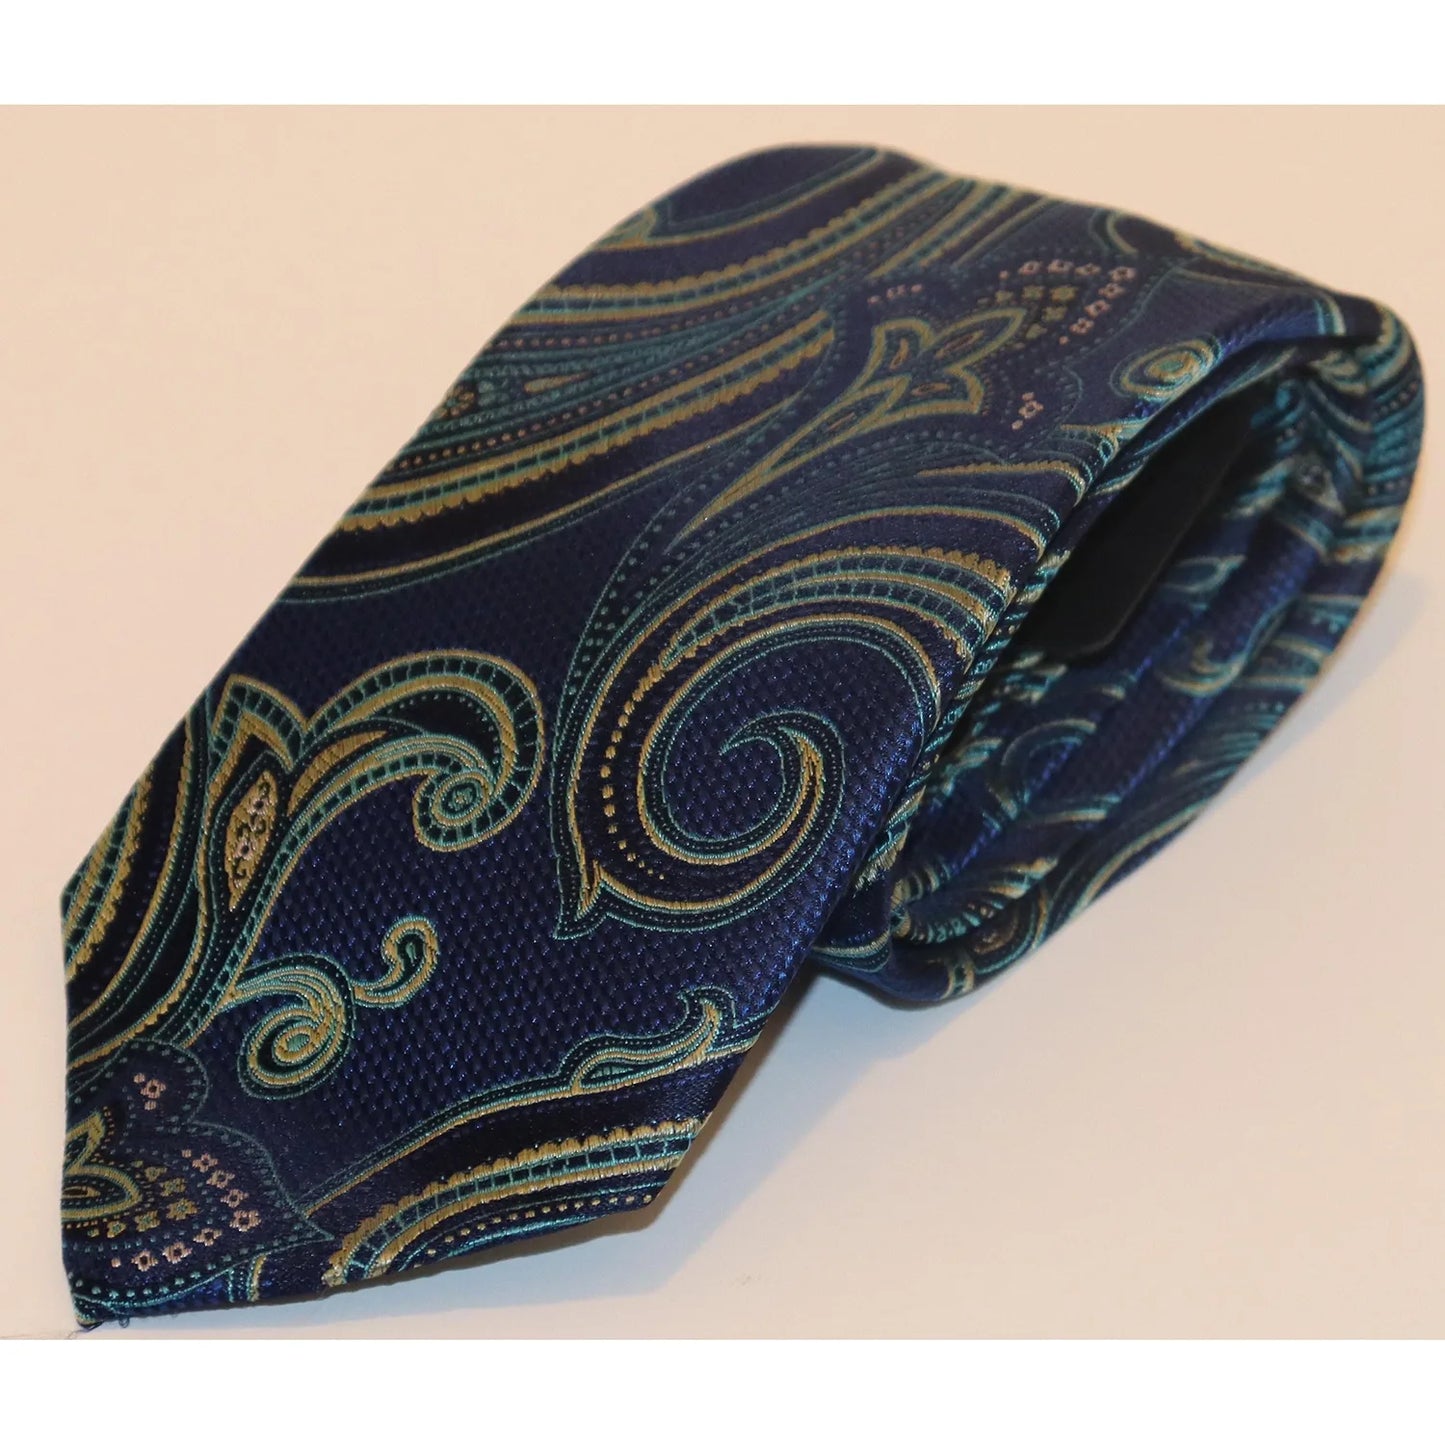 The Shirt Shop Tie - Royal Blue Paisley